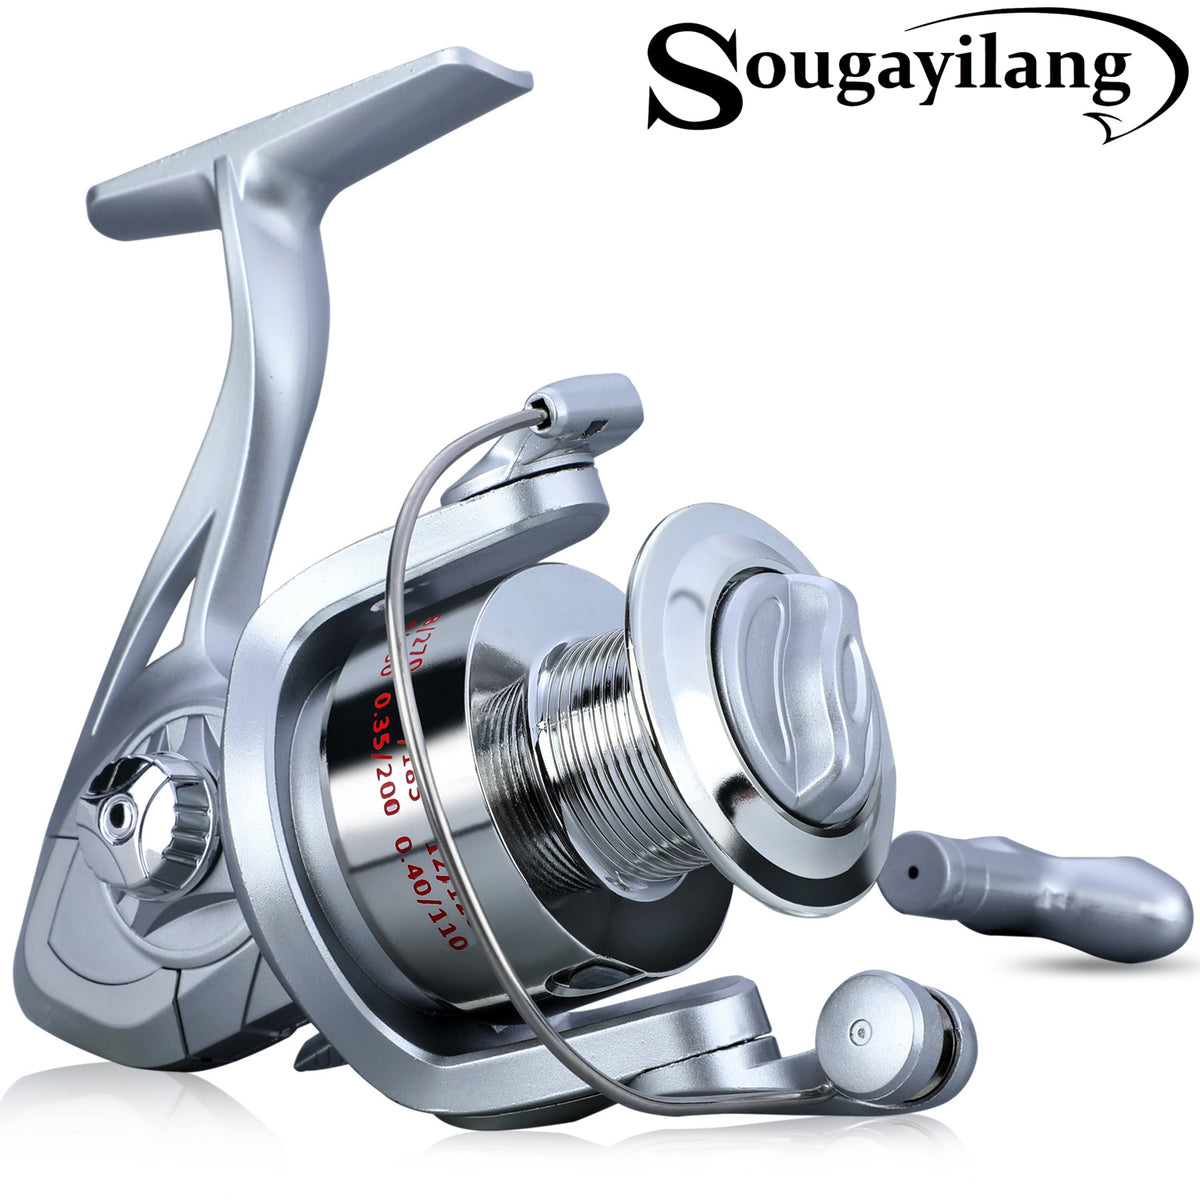 Sougayilang 1000-3000 Fishing Reels Speed 5.2:1 Gear Ratio